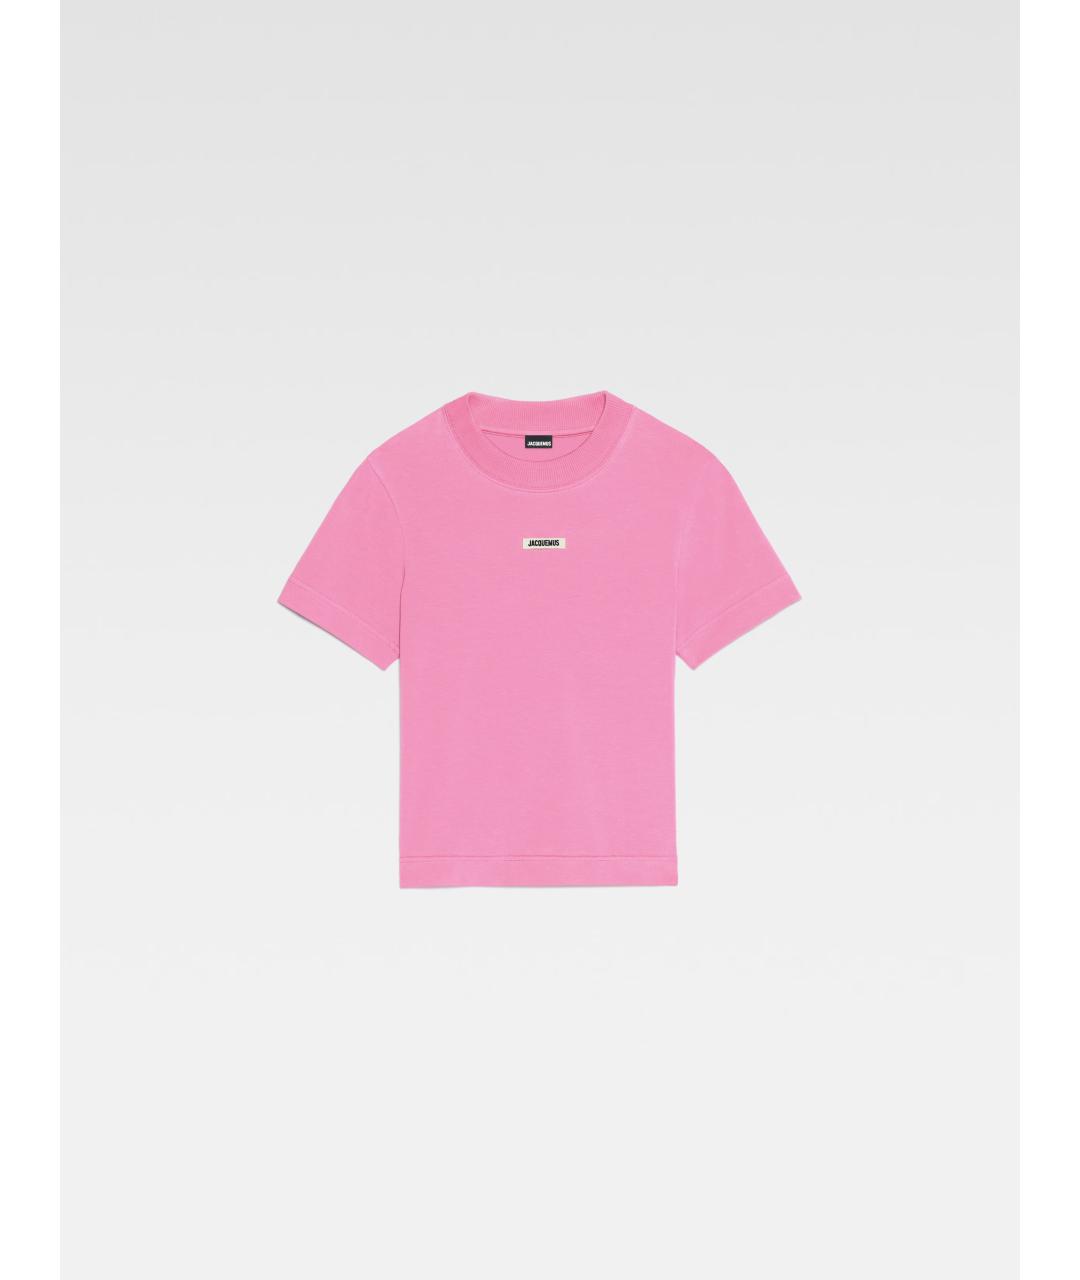 JACQUEMUS Розовая хлопковая футболка, фото 4